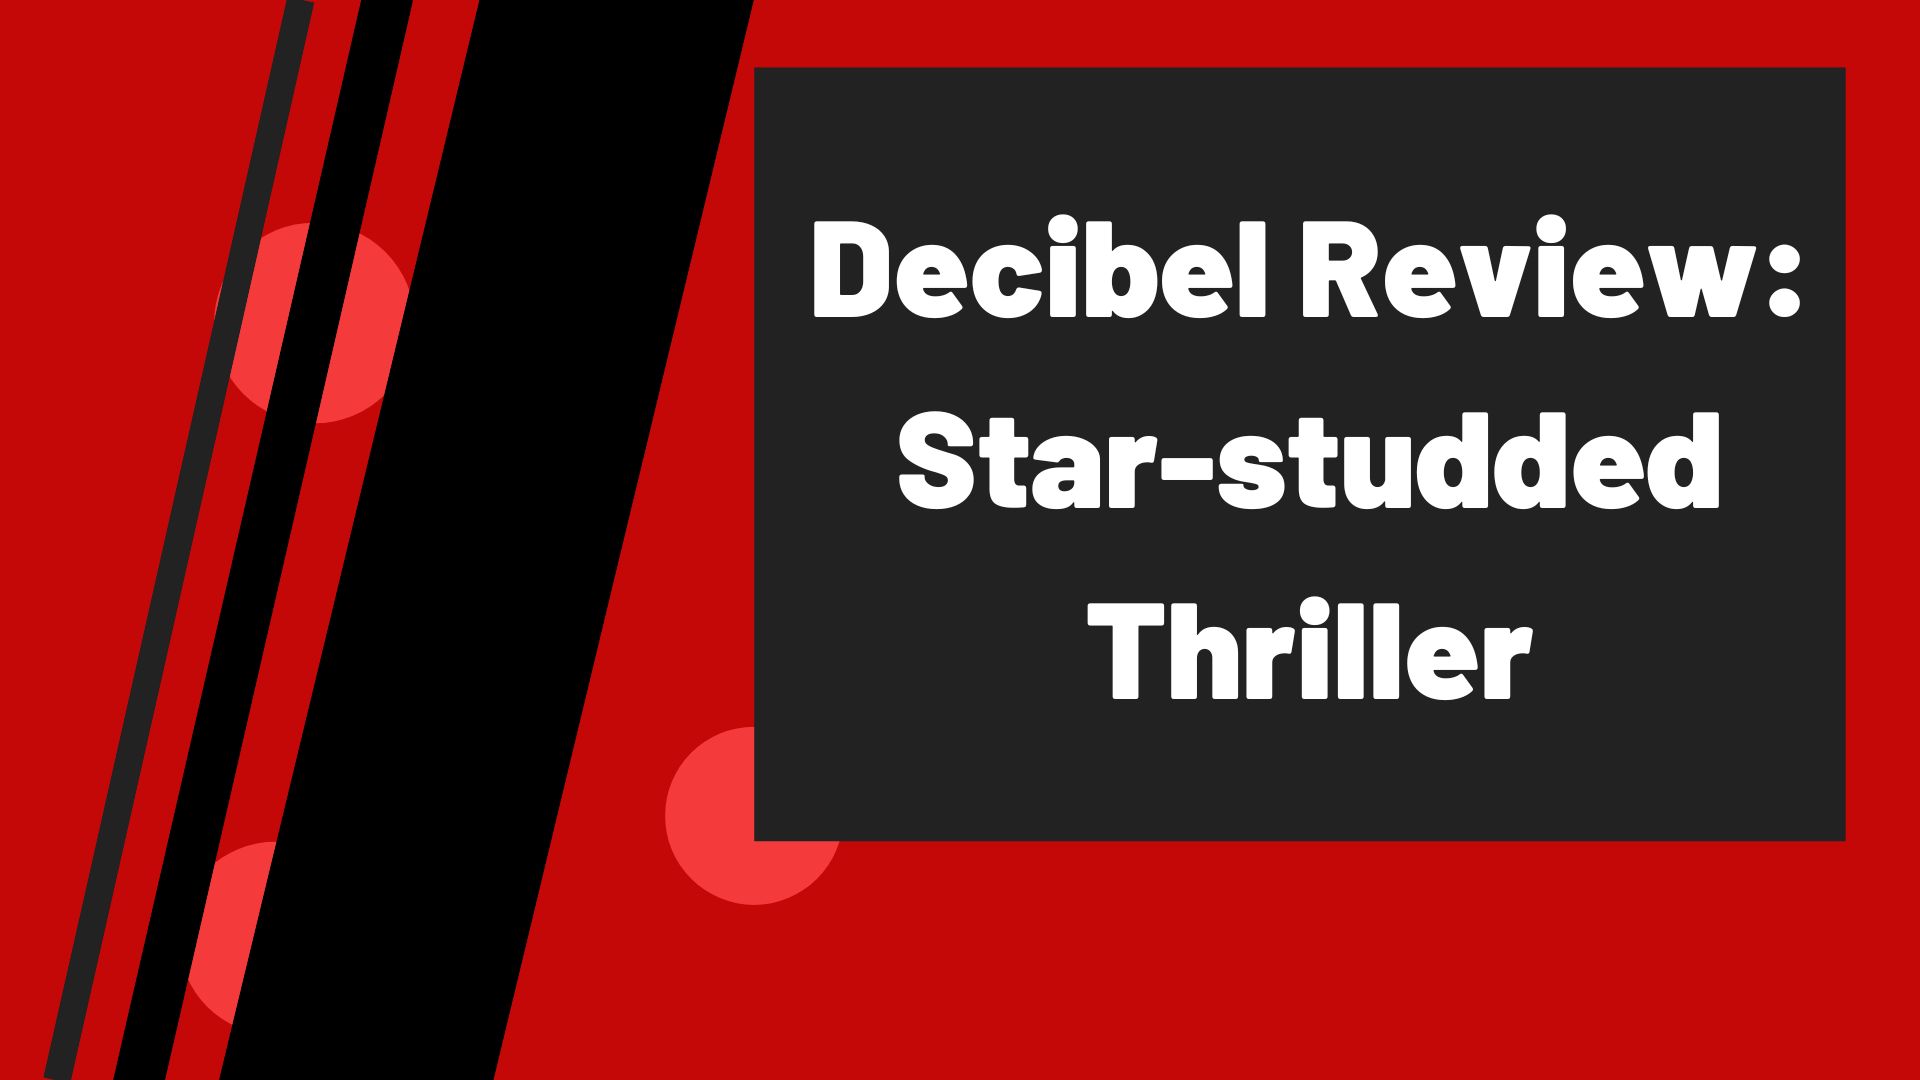 Decible Review